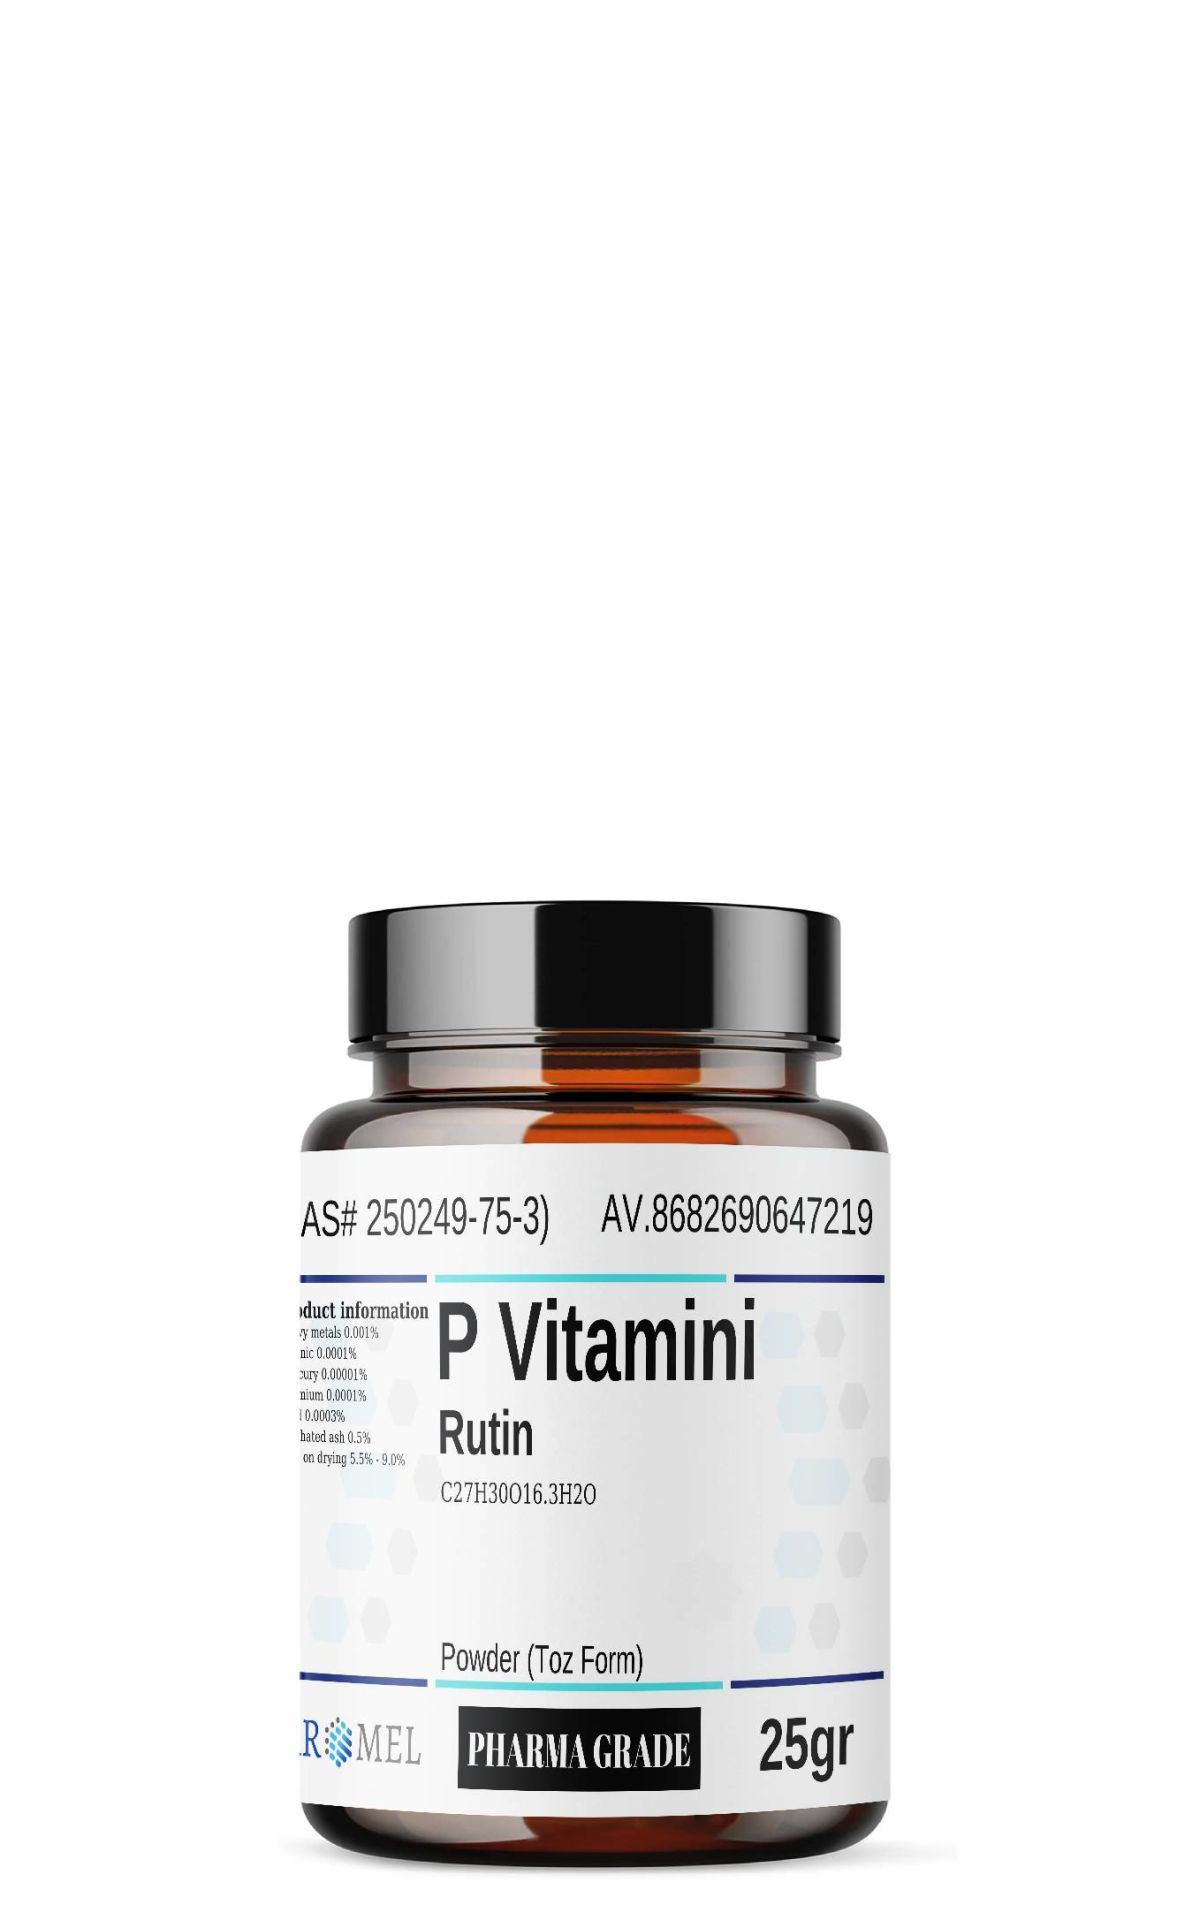 Aromel P Vitamini Rutin | 25 gr | RUTINE Vitamin P